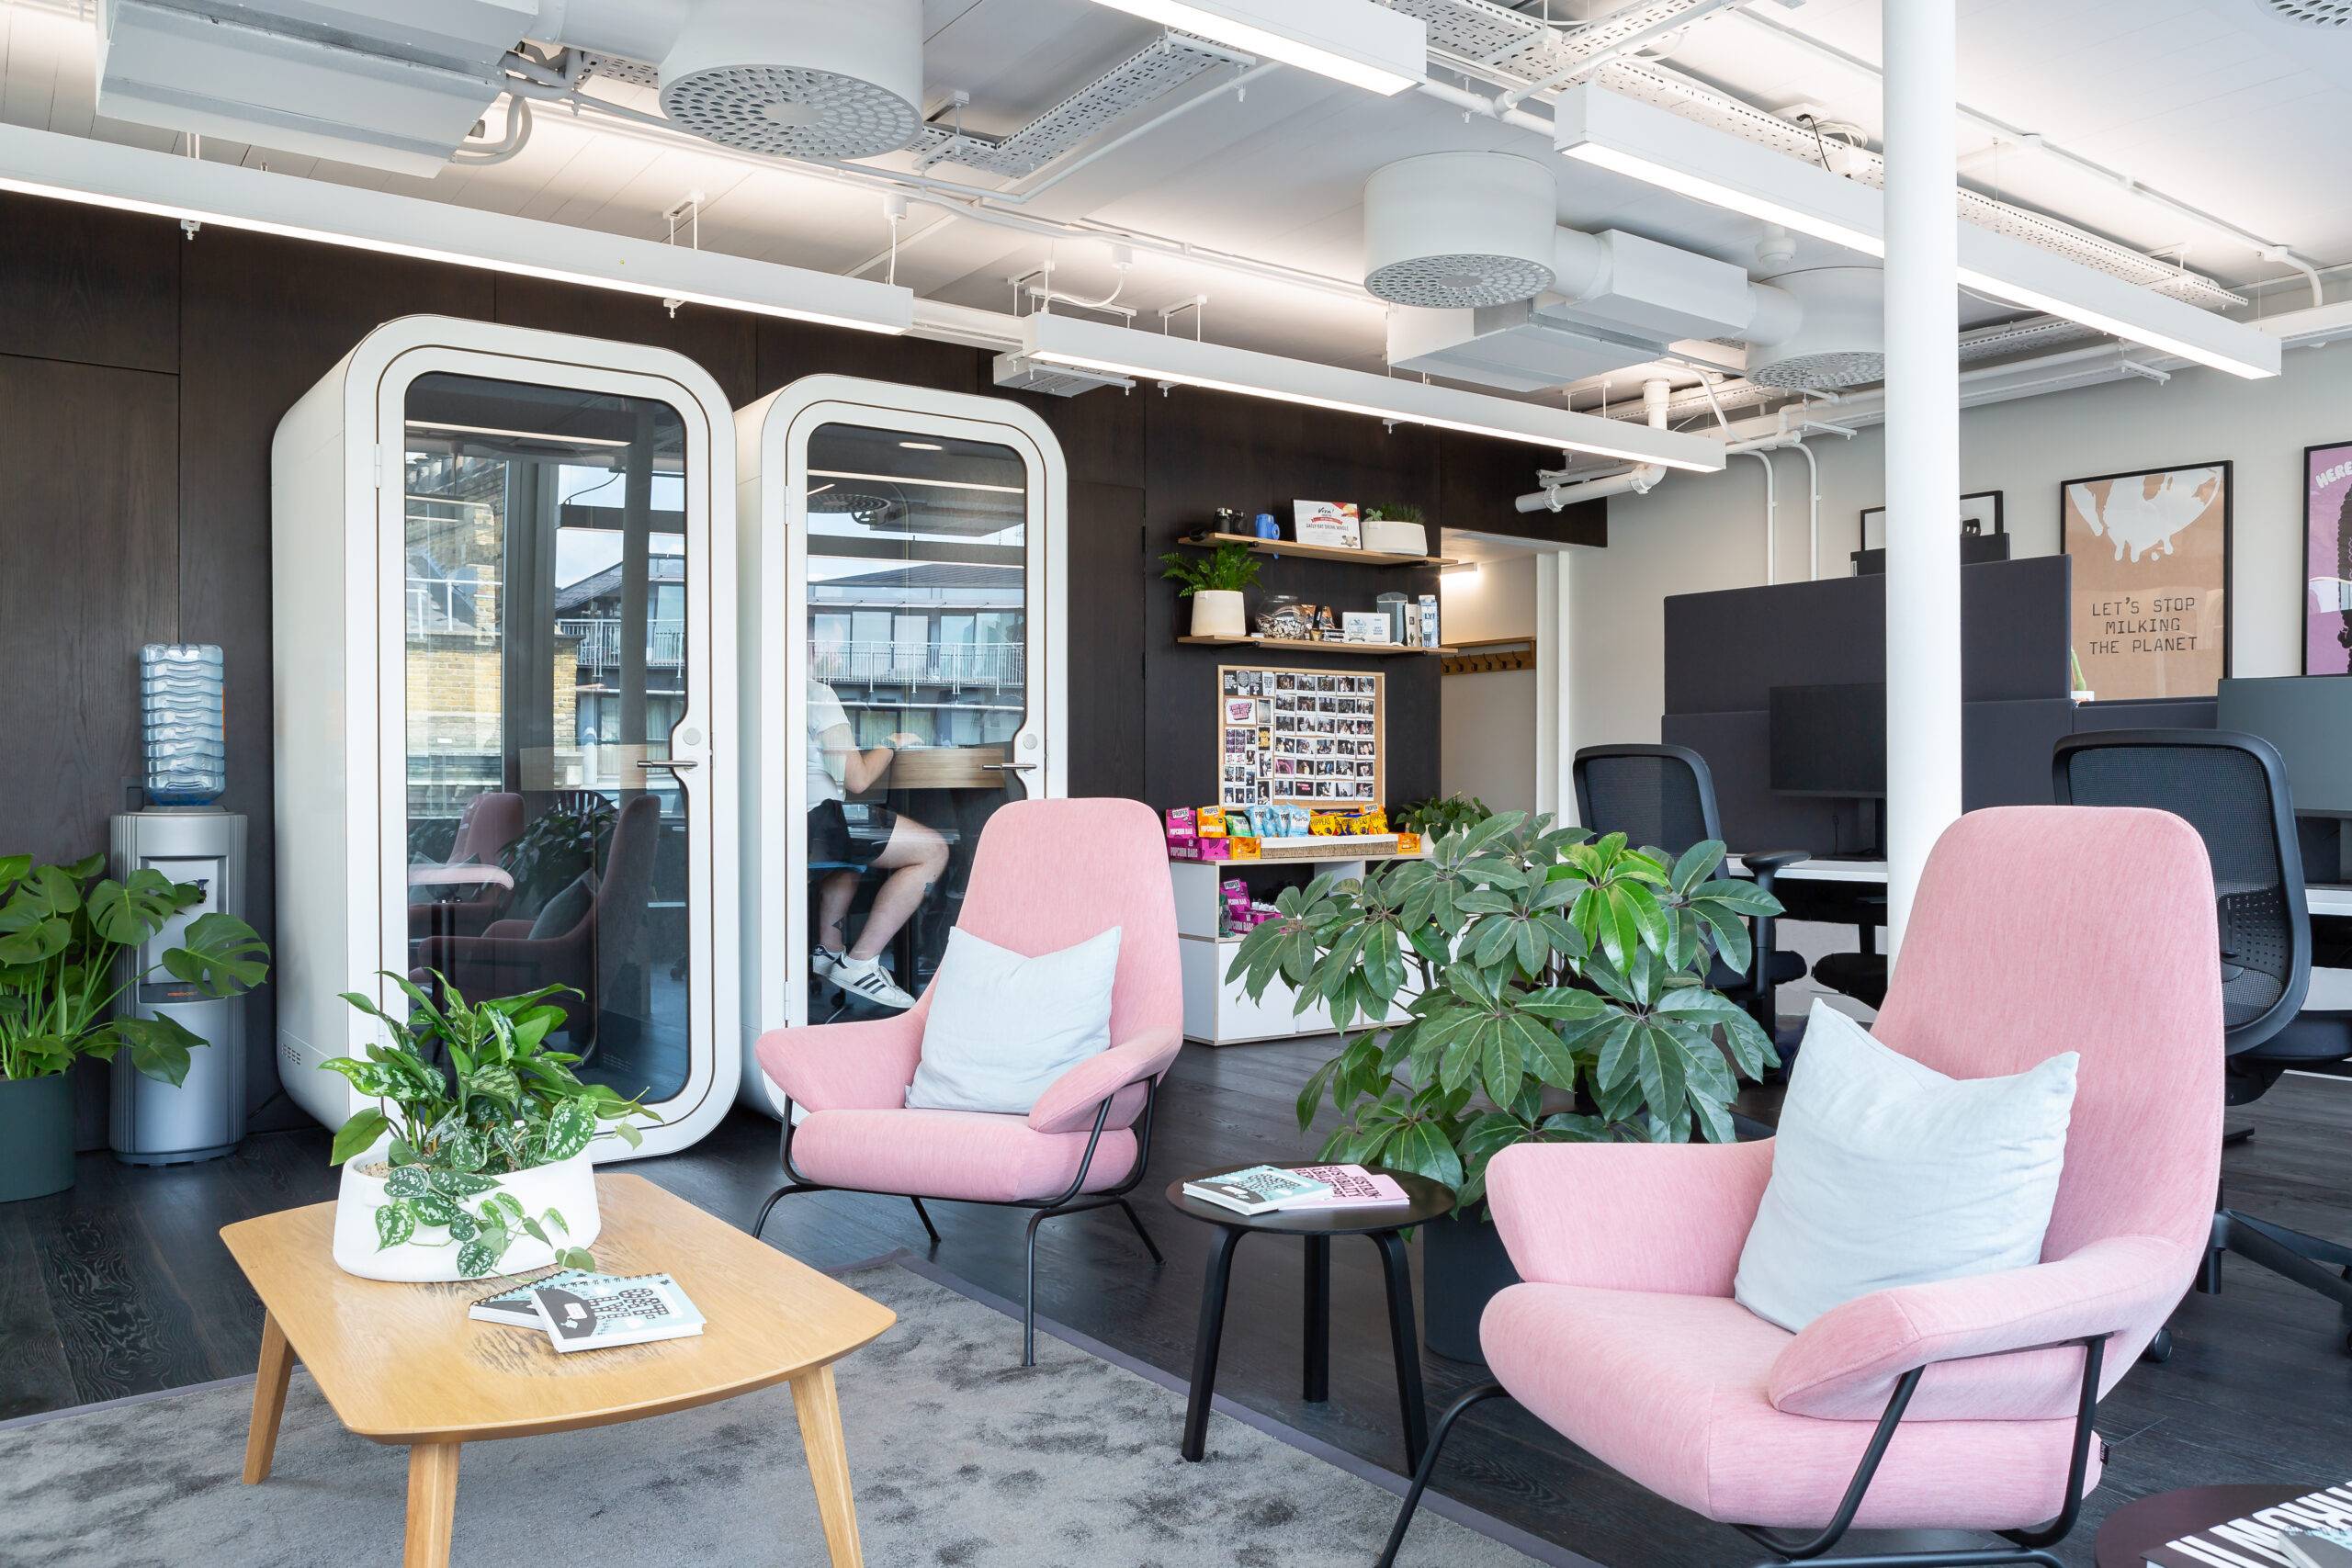 Want a Gen Z workforce? Design an office that wows on Instagram